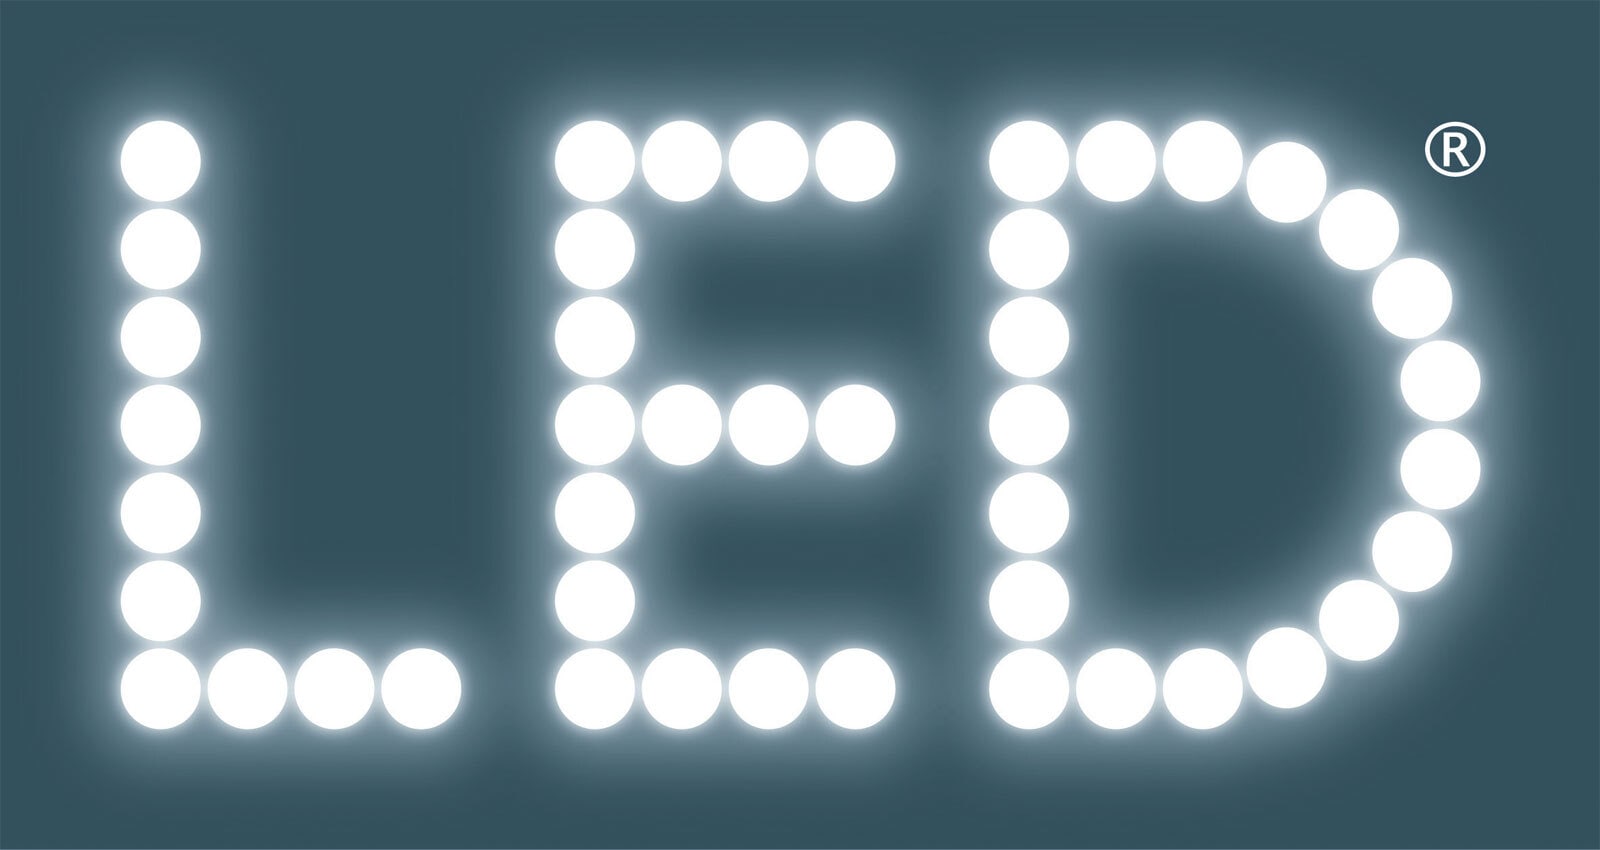 Paul Neuhaus LED Pendelleuchte HYDRA 5-flg stahlfarbig